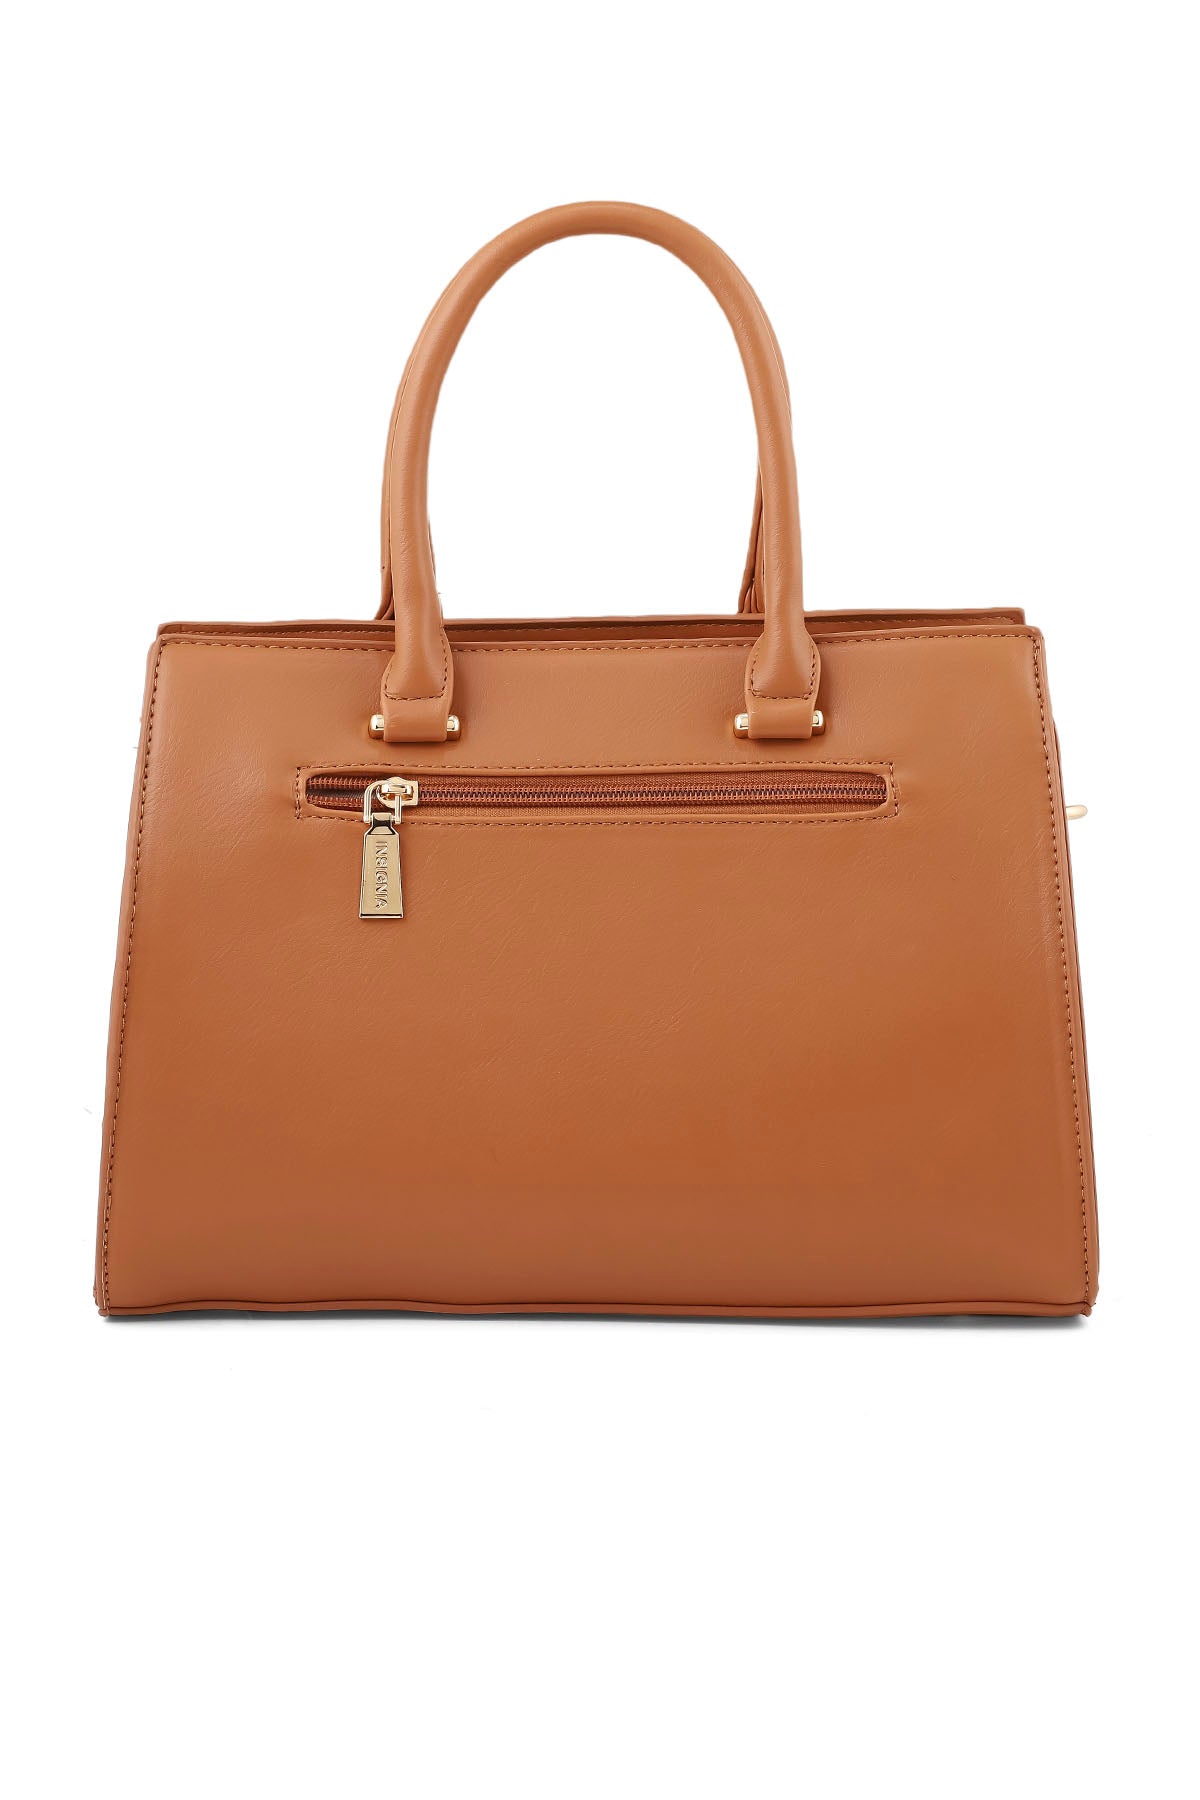 Formal Tote Hand Bags B15034-Brown